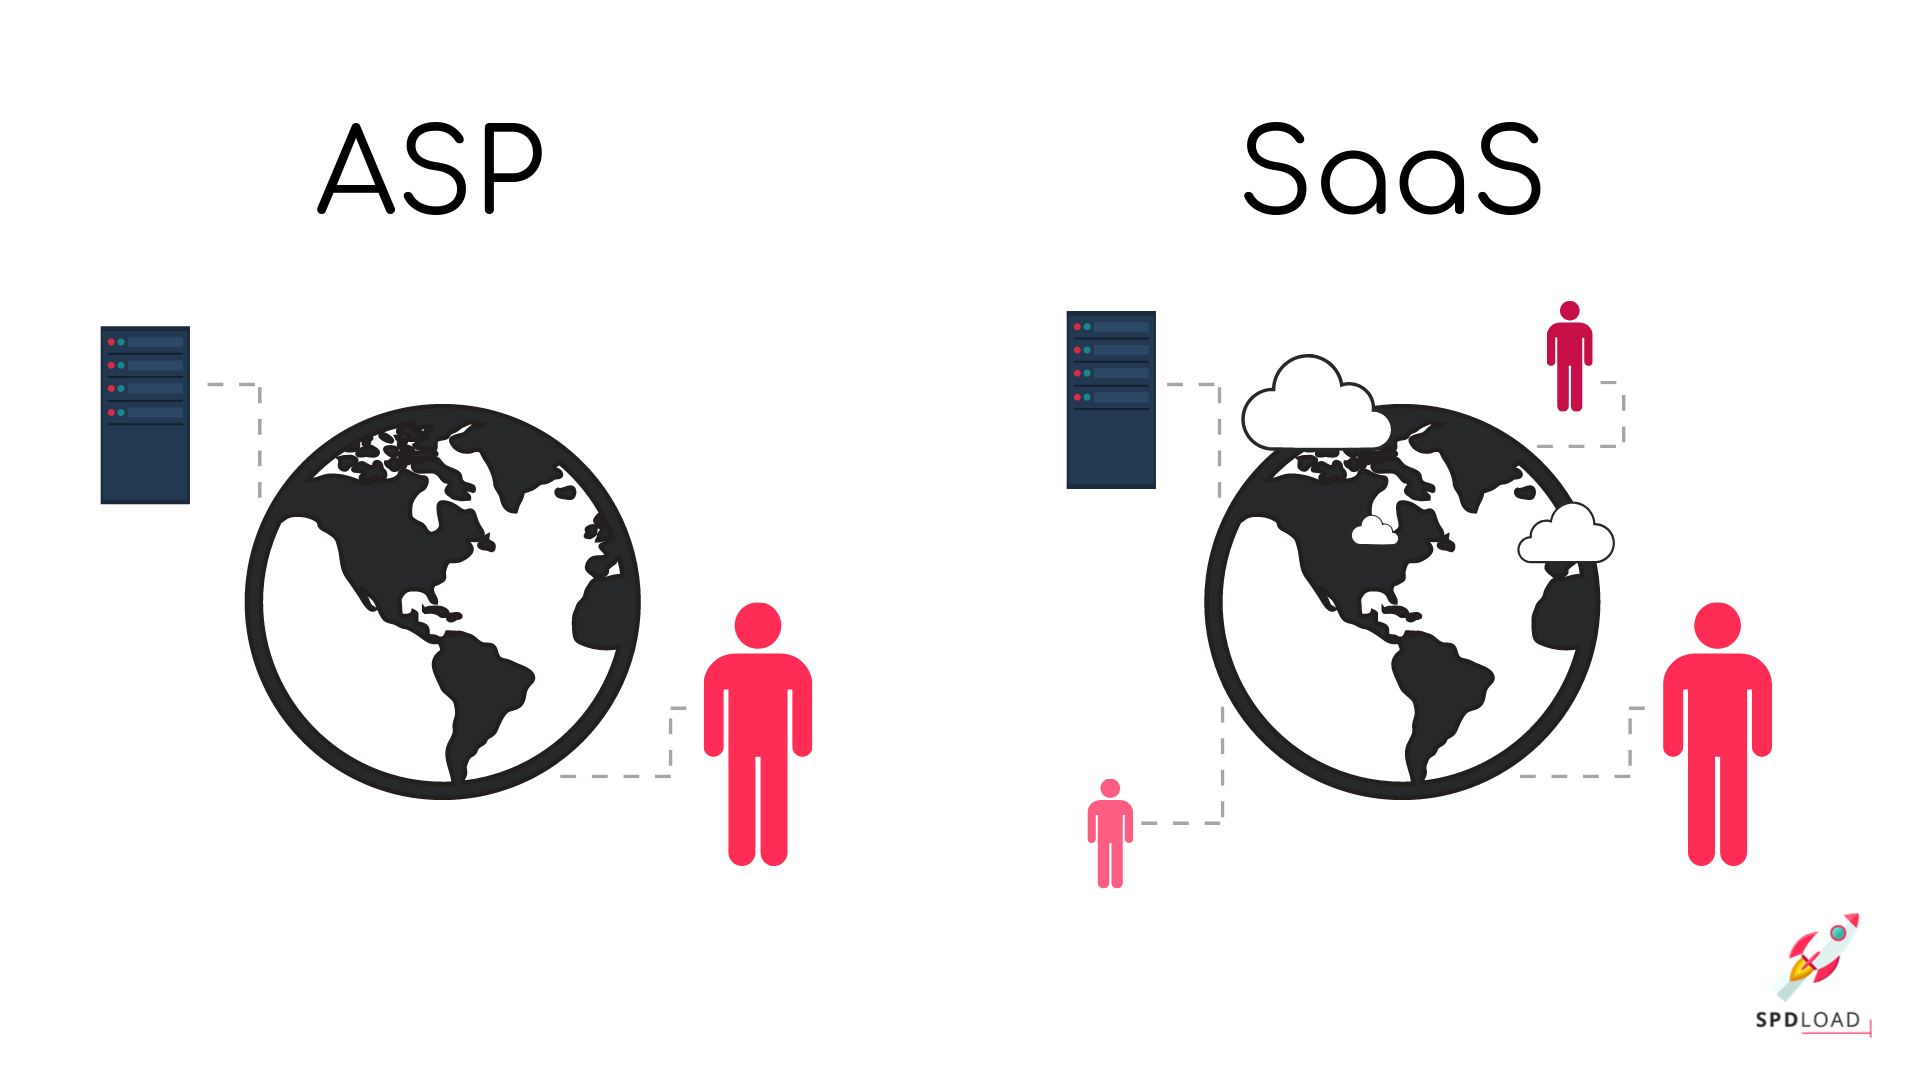 Saas and ASP